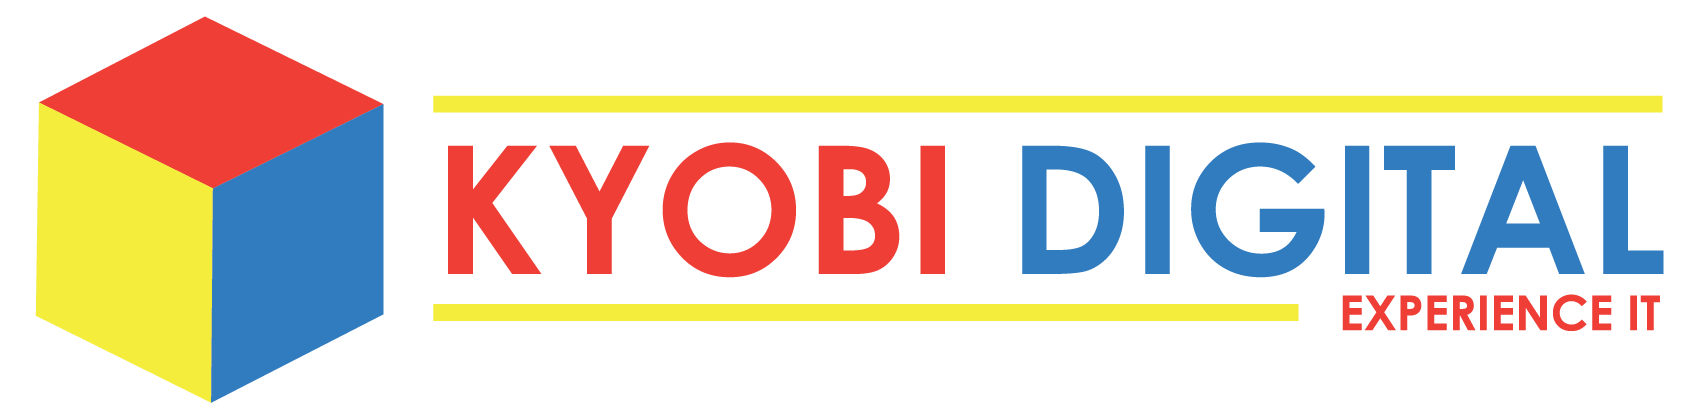 Kyobi Digital LTD